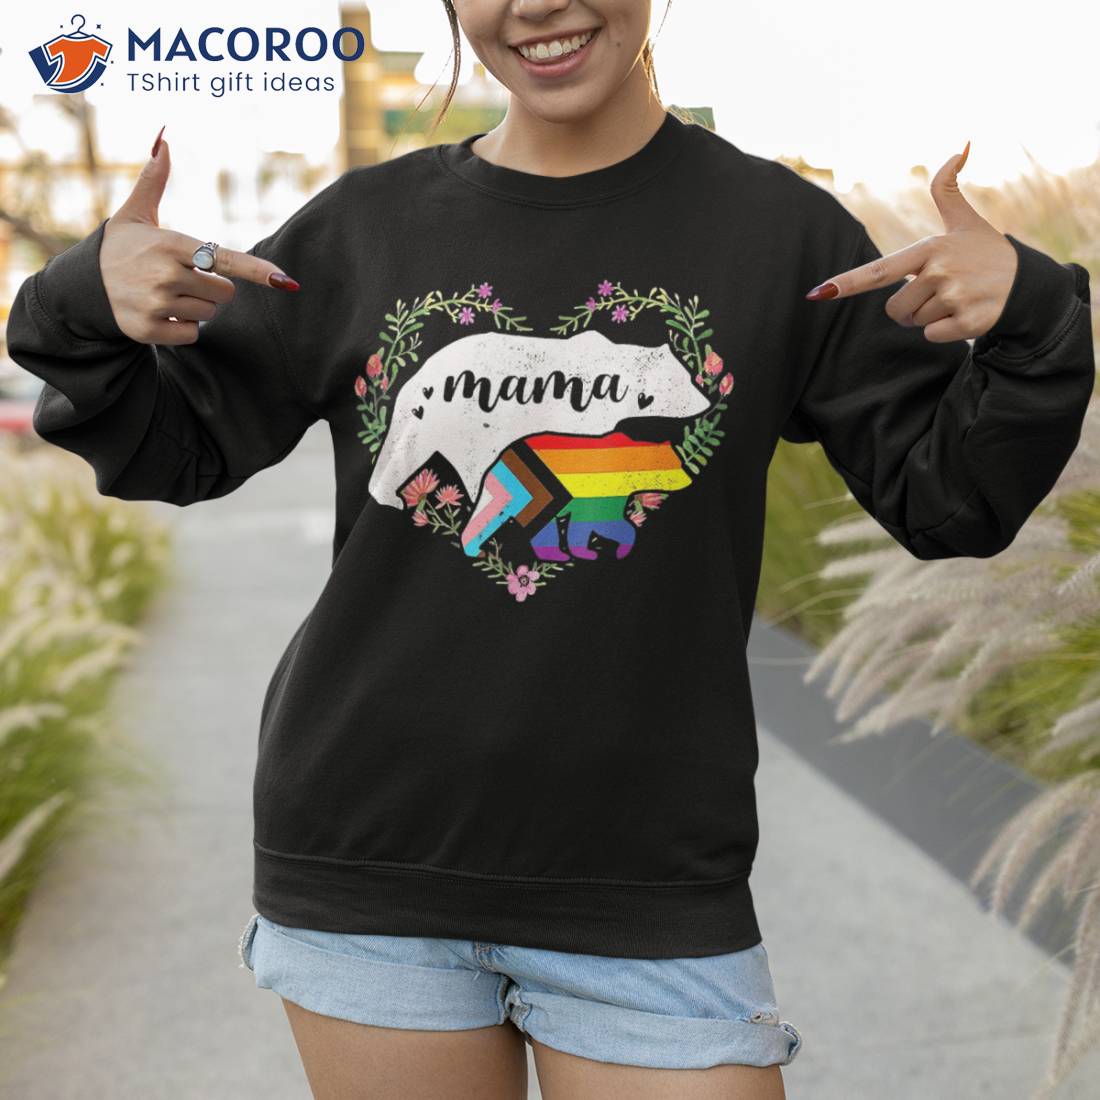 https://images.macoroo.com/wp-content/uploads/2023/04/lgbtq-mama-bear-progress-pride-flag-gay-equal-rights-rainbow-shirt-sweatshirt.jpg